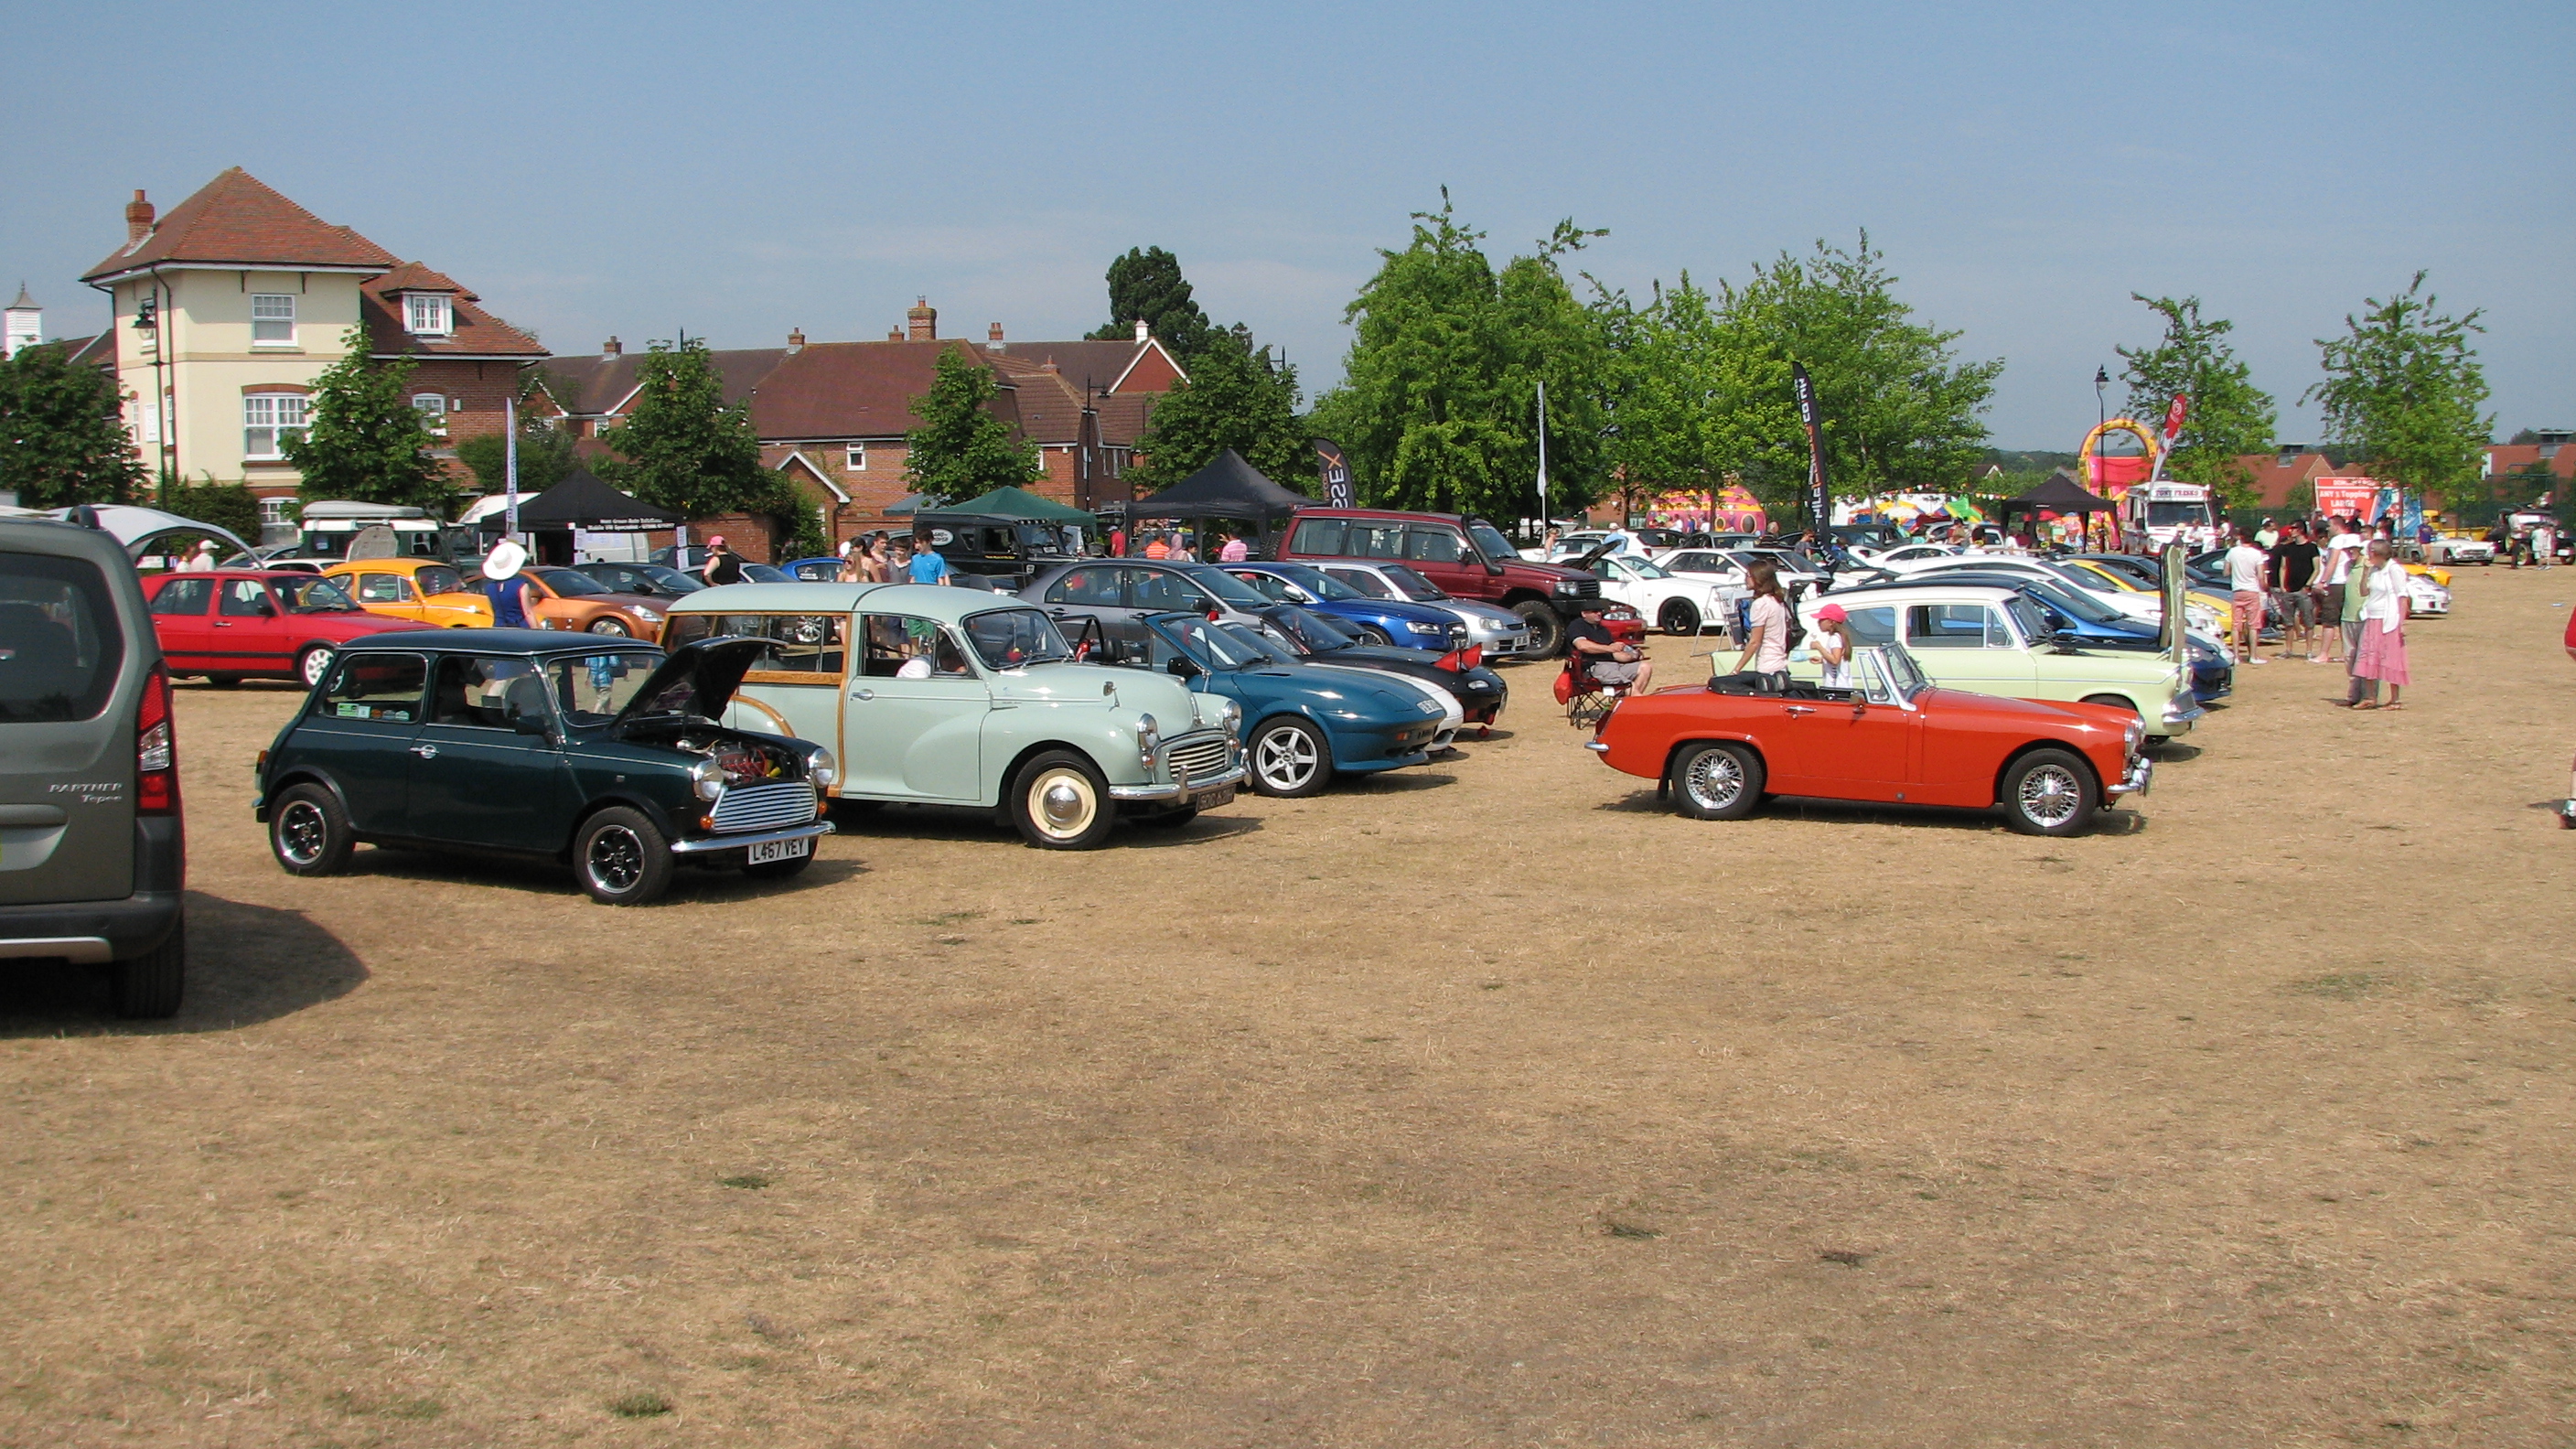 Elvetham Heath Car Show - Page 1 - Thames Valley & Surrey - PistonHeads